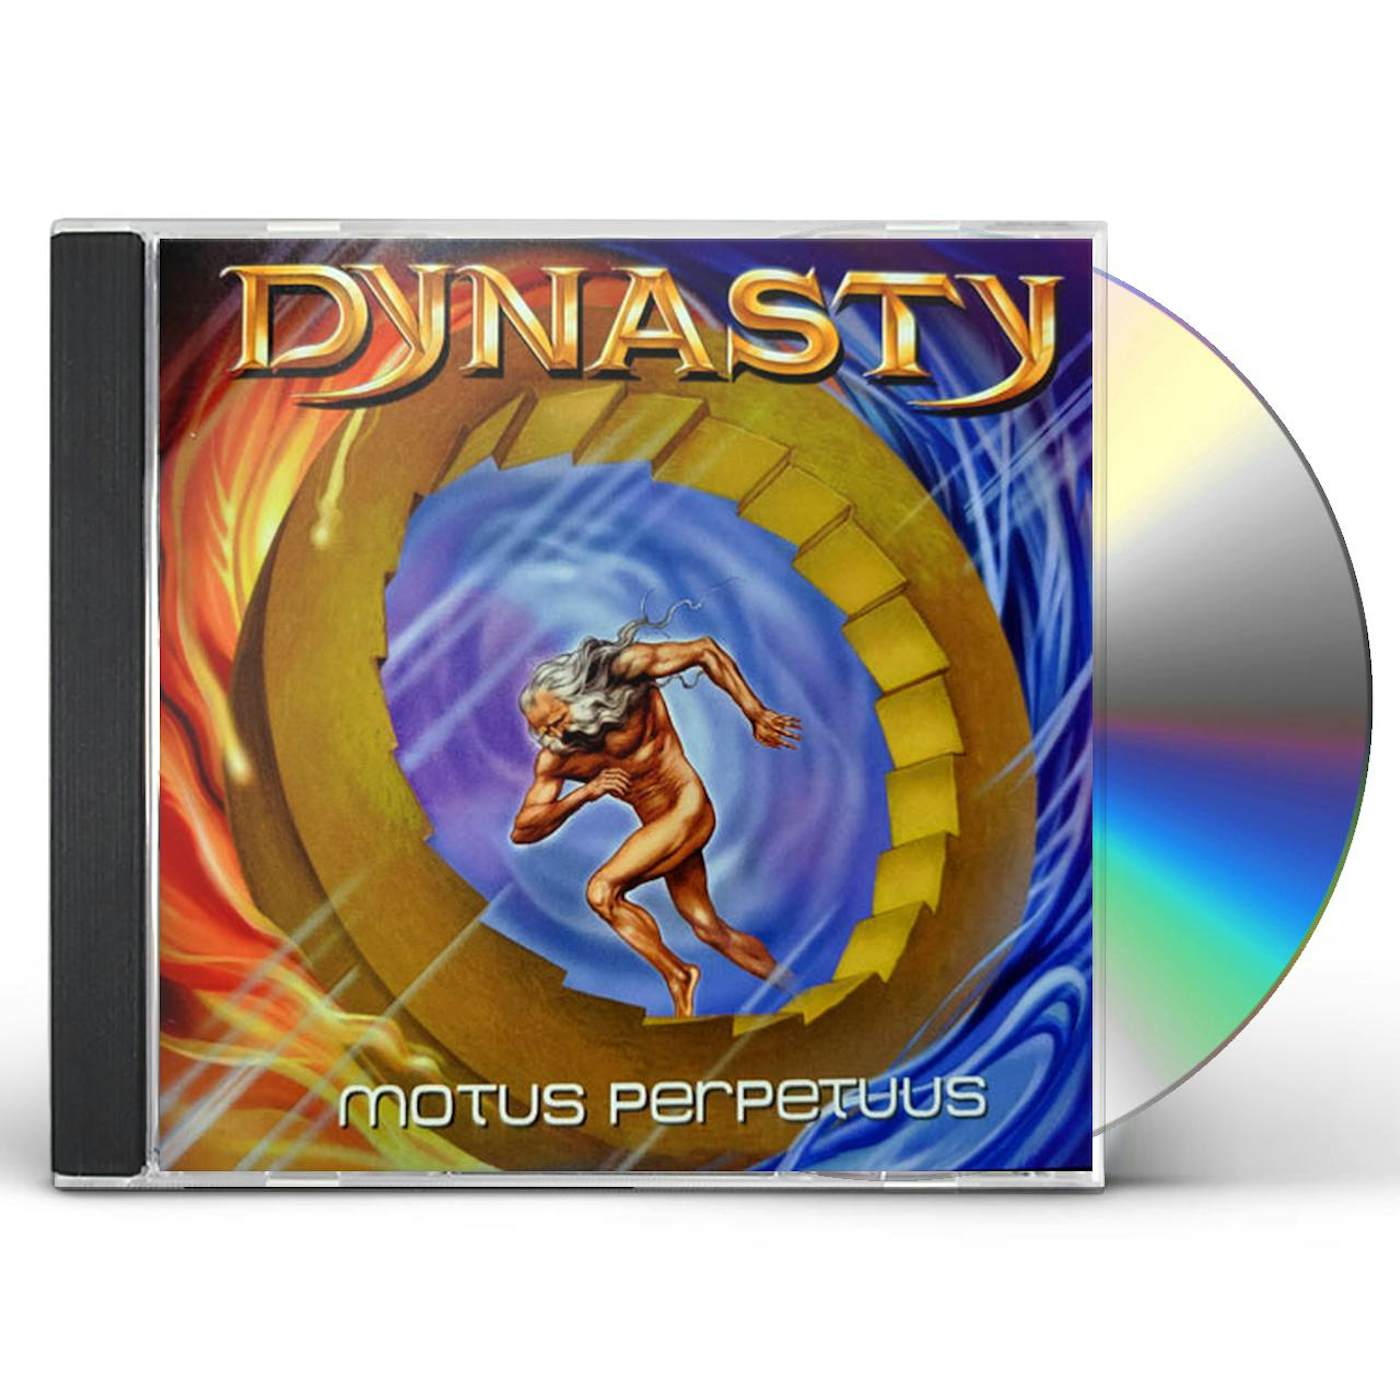 Dynasty MORTUS PEPETUUS CD